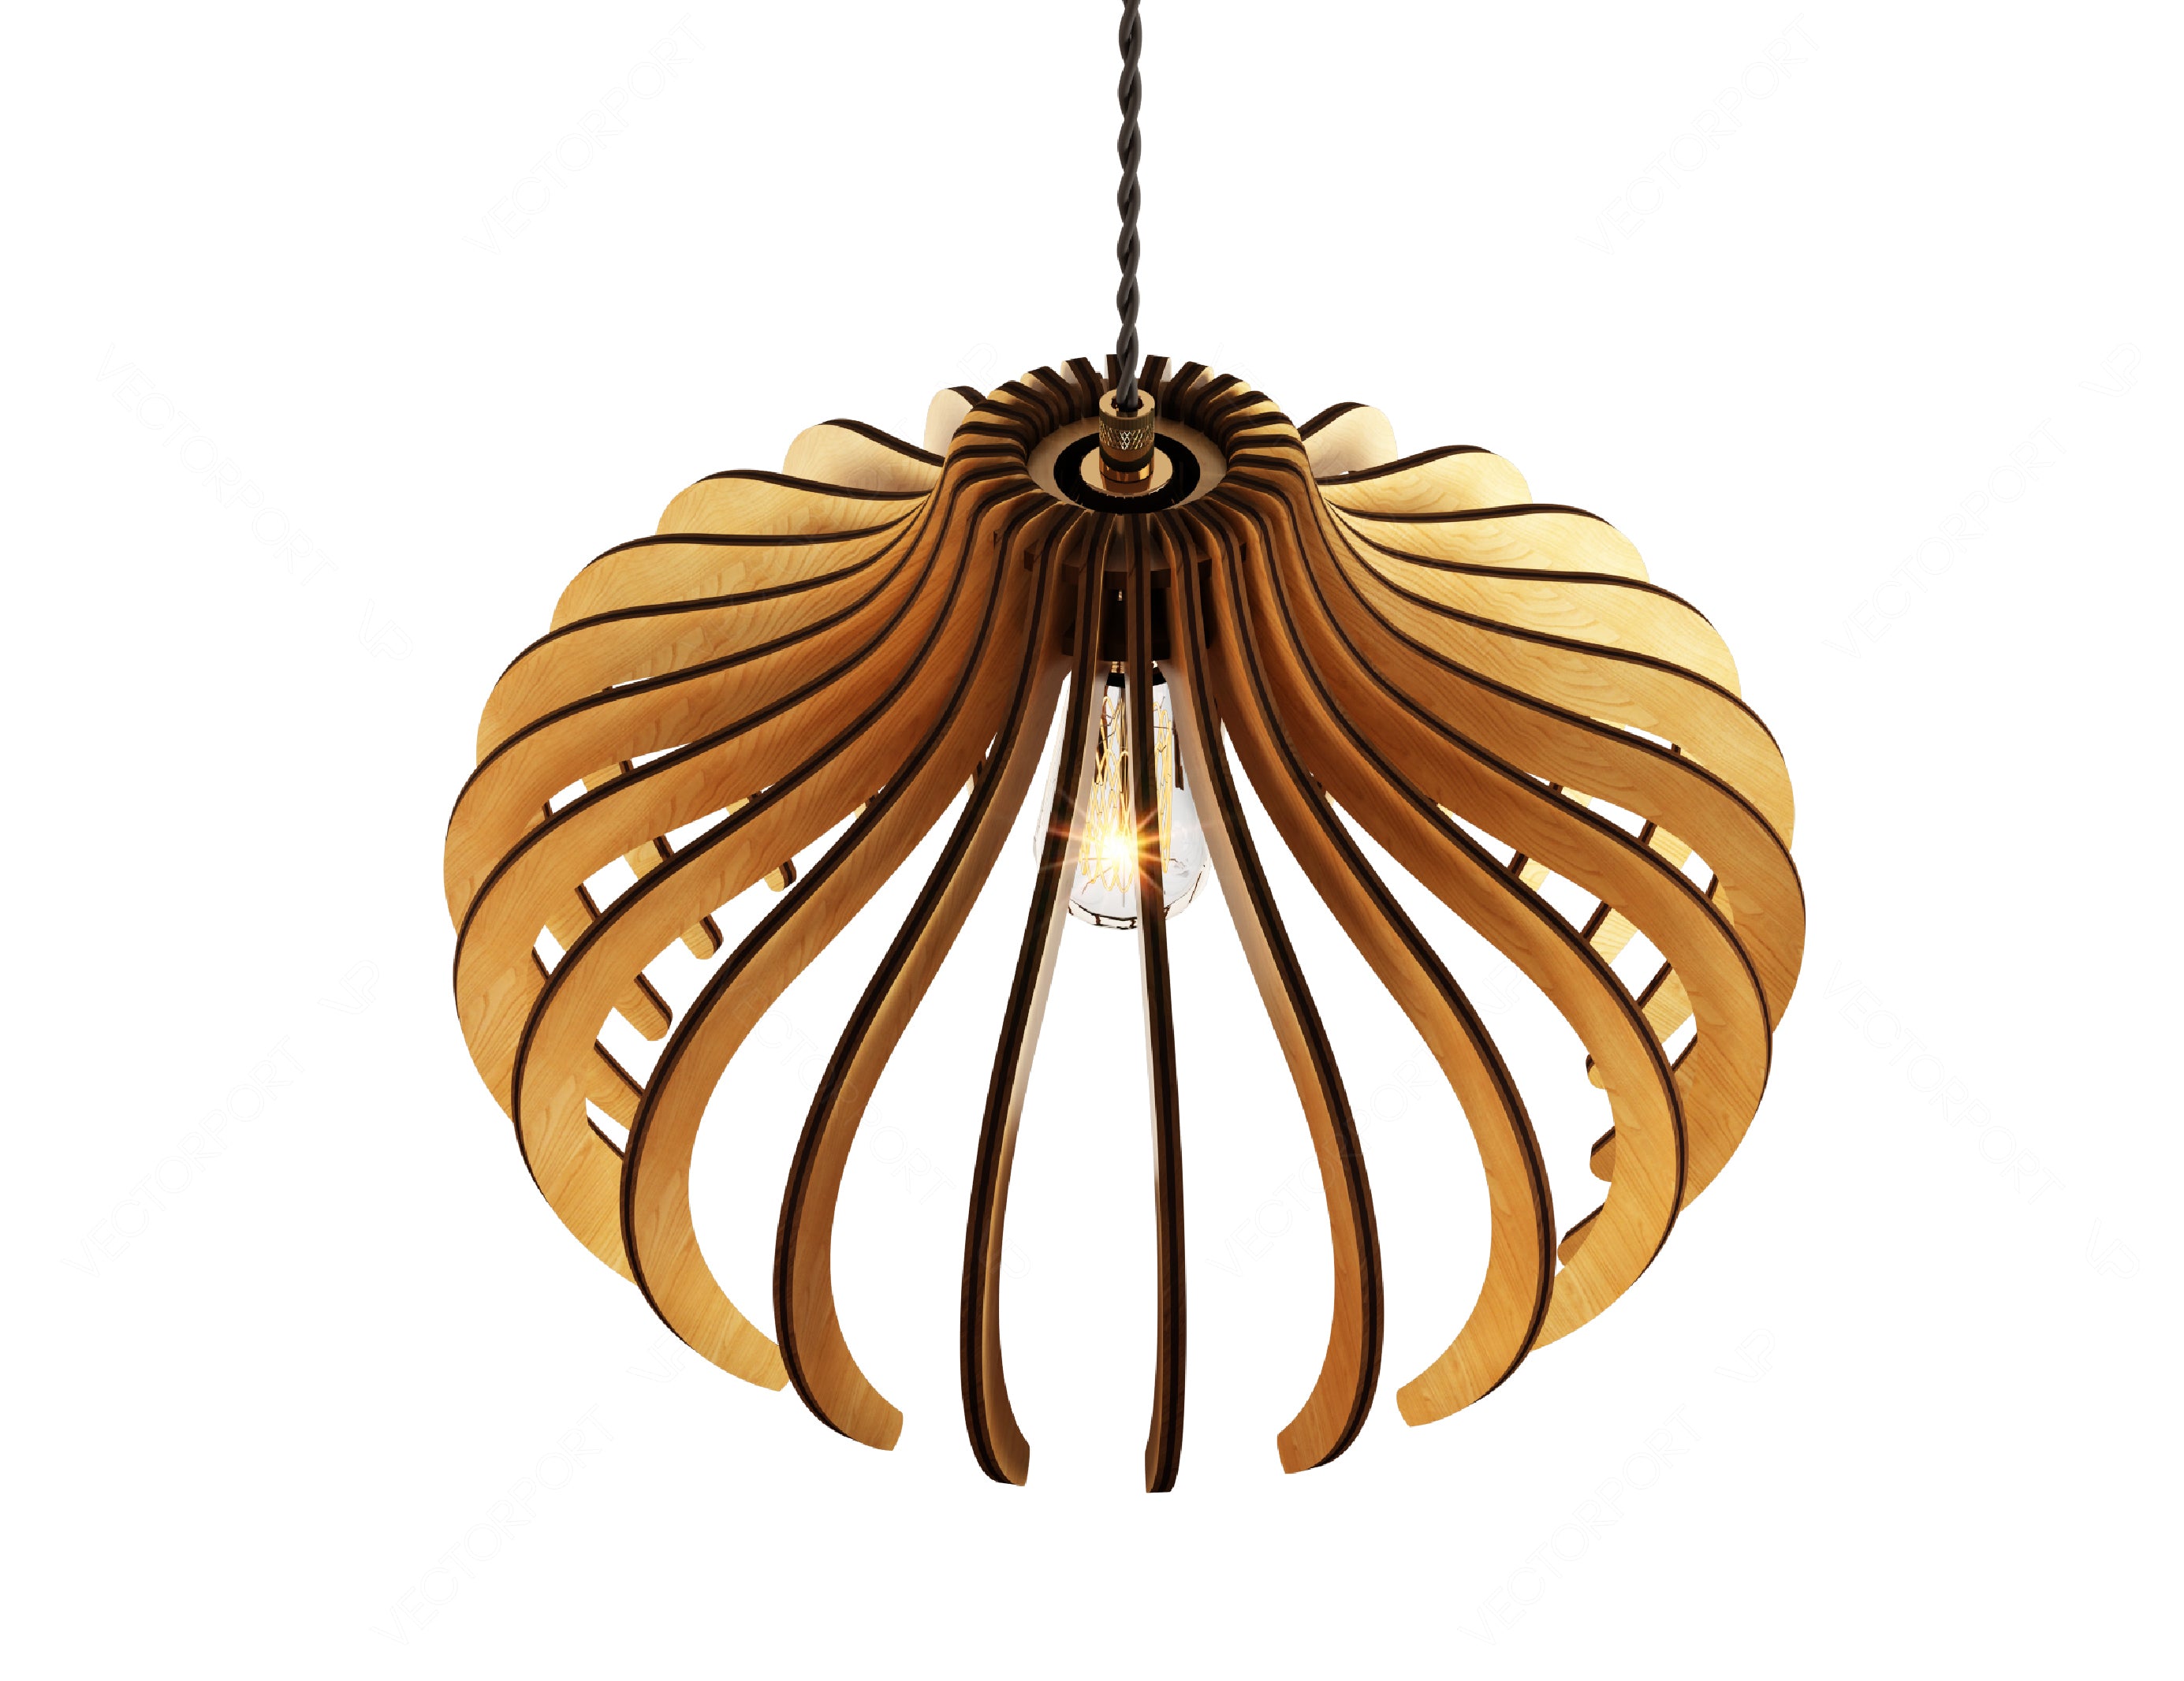 Elliptic Round Modern Wood Pendant Light Chandelier Lamp lampshade plywood Cut Files |#U076|